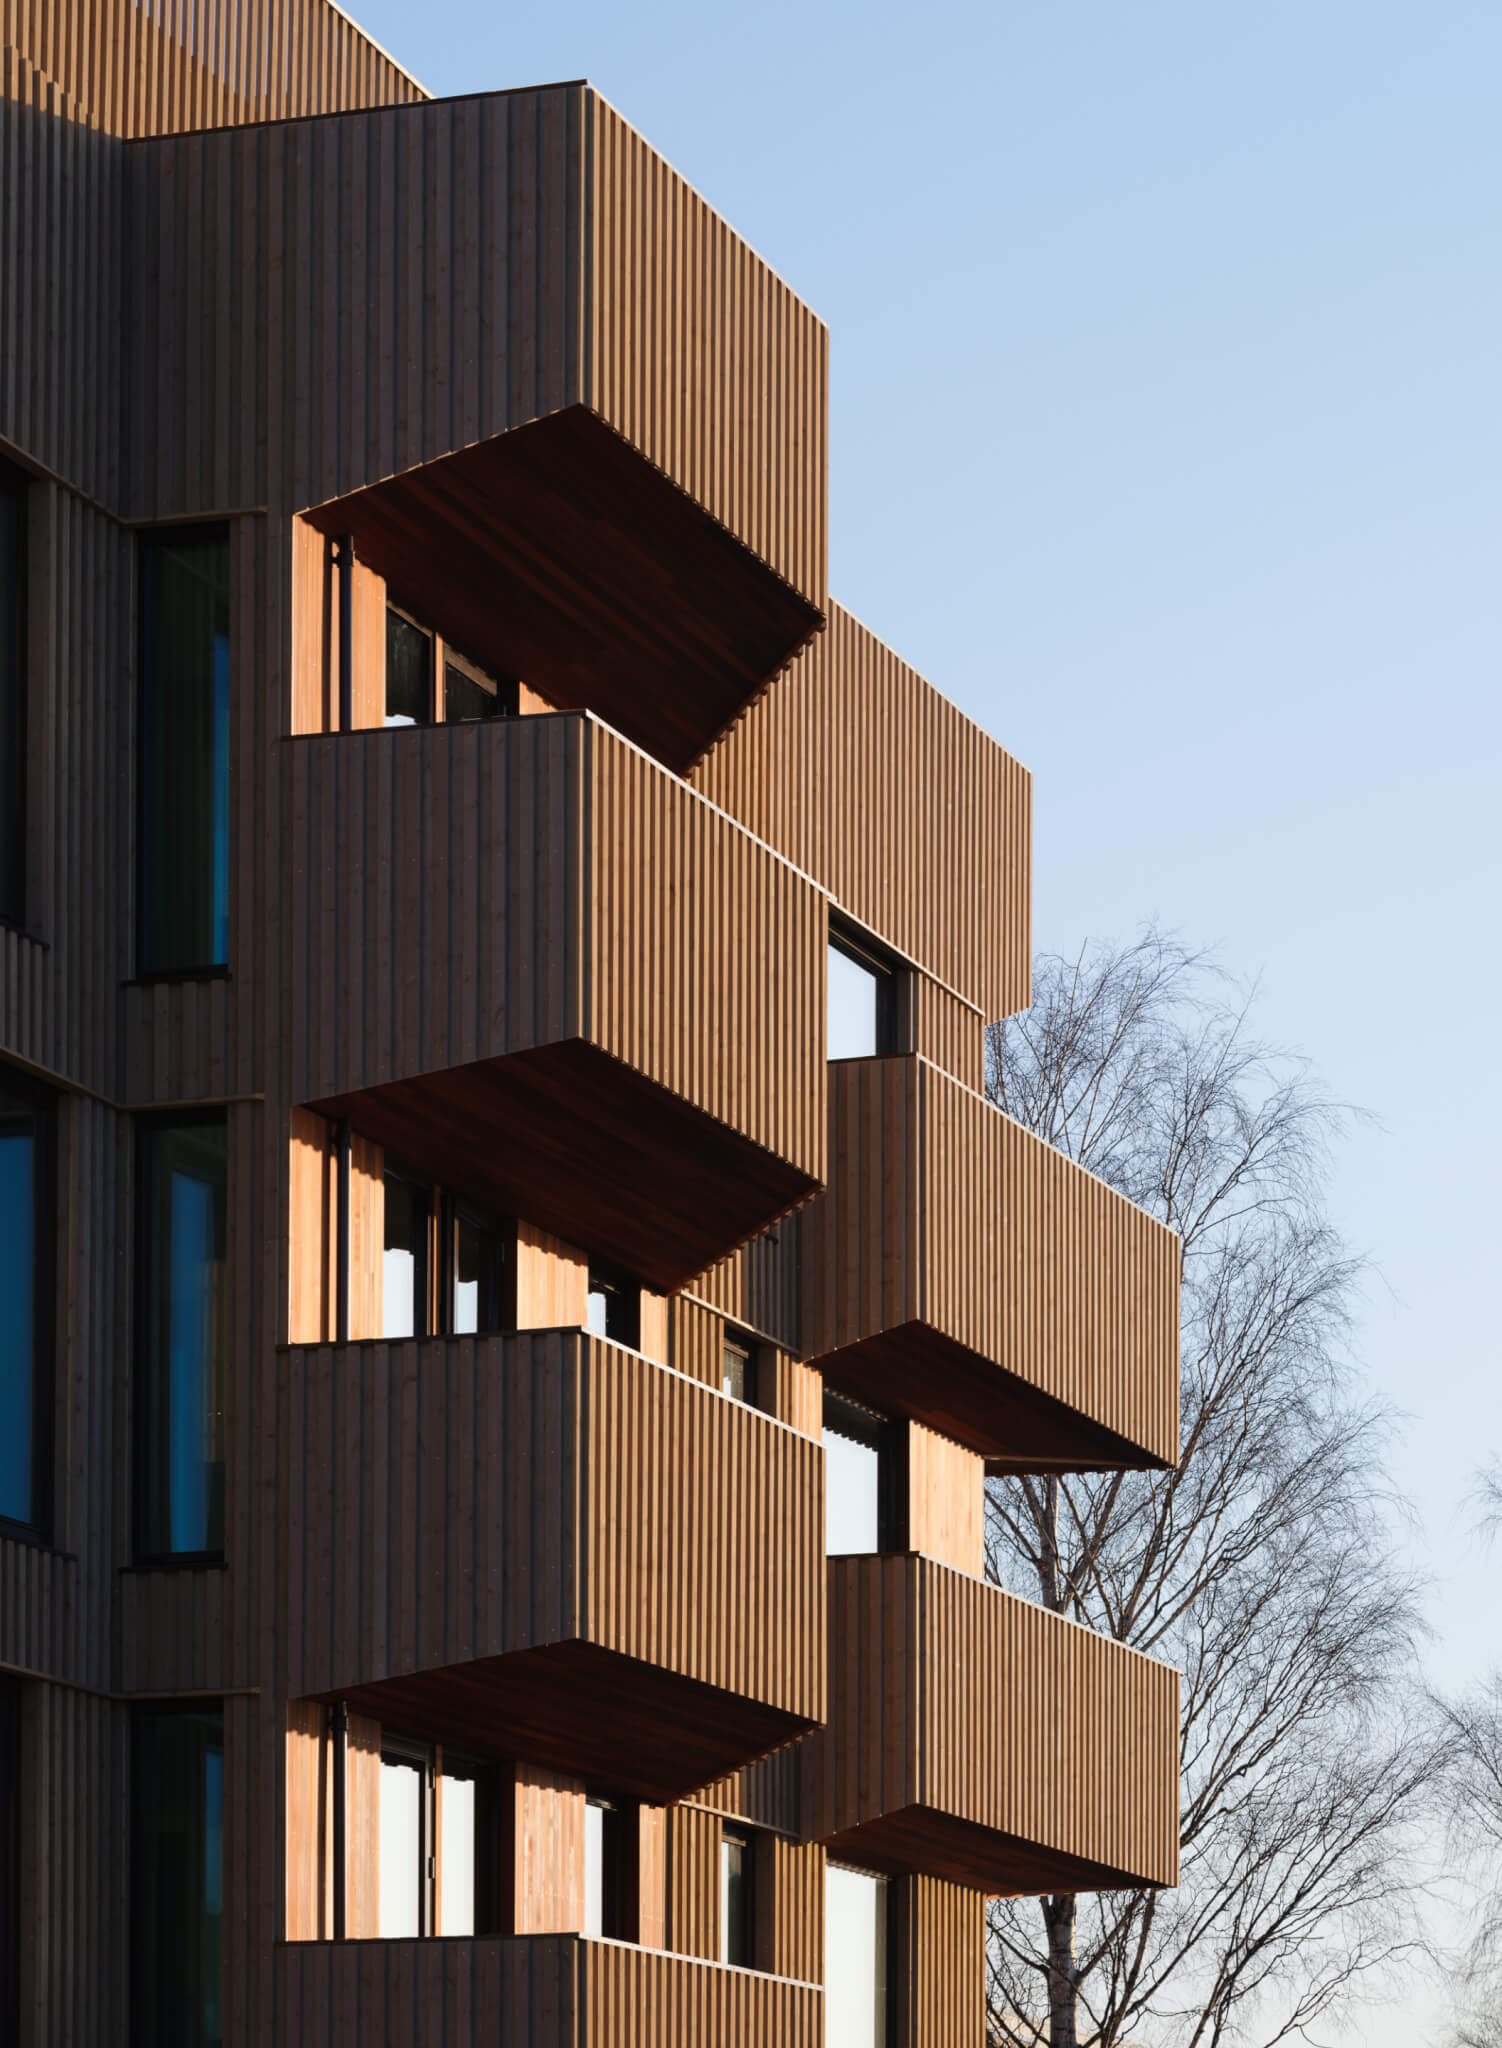 oblique view of a timber-clad facade